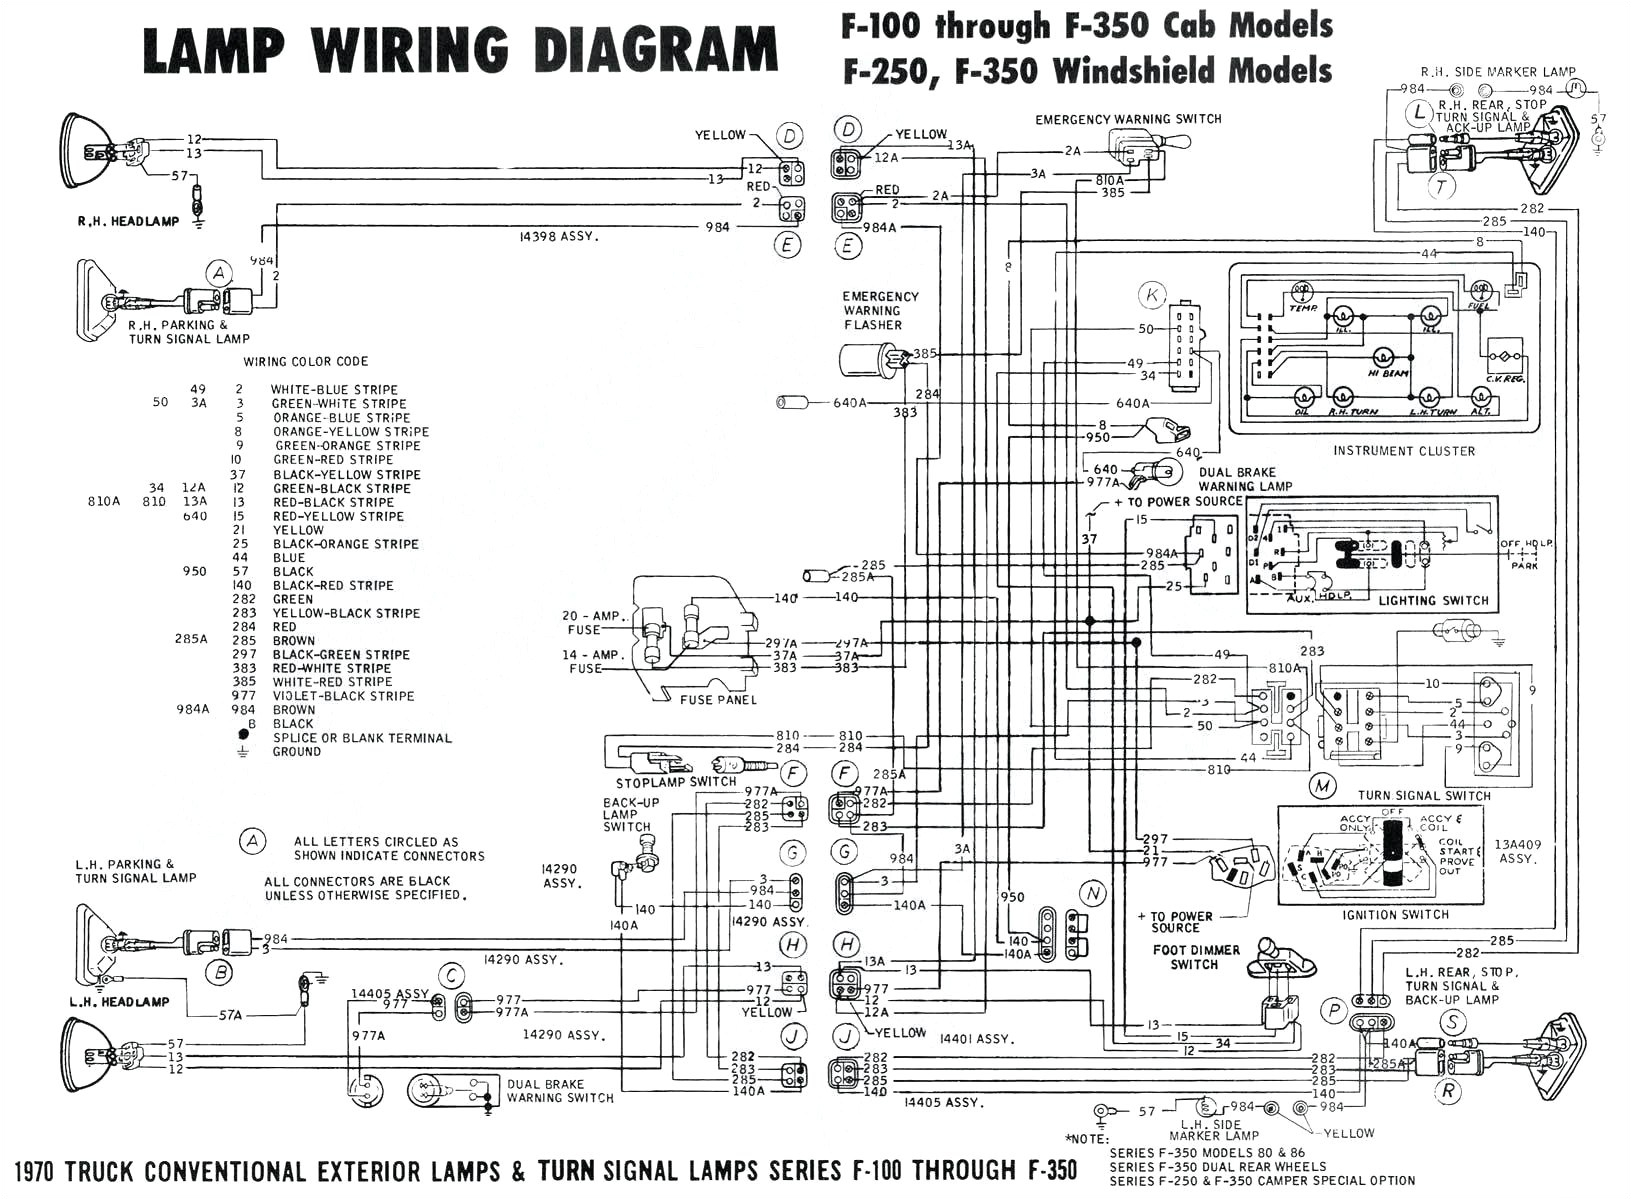 gm headlight switch wiring diagram database universal headlight switch wiring with dimmer free download wiring